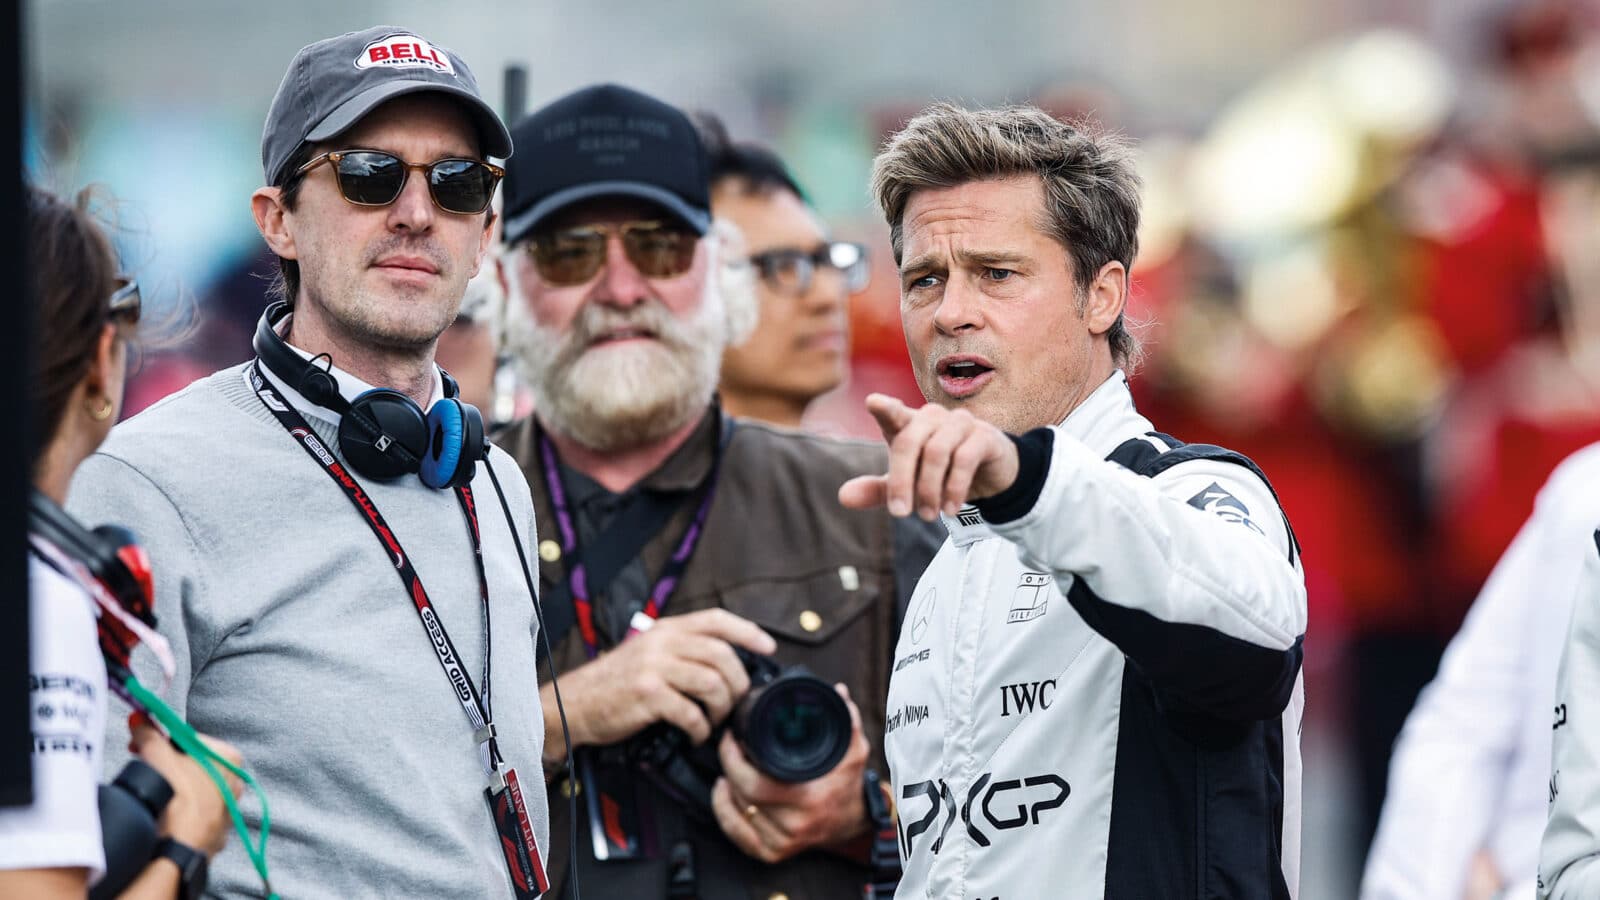 Brad Pitt on set at Silverstone